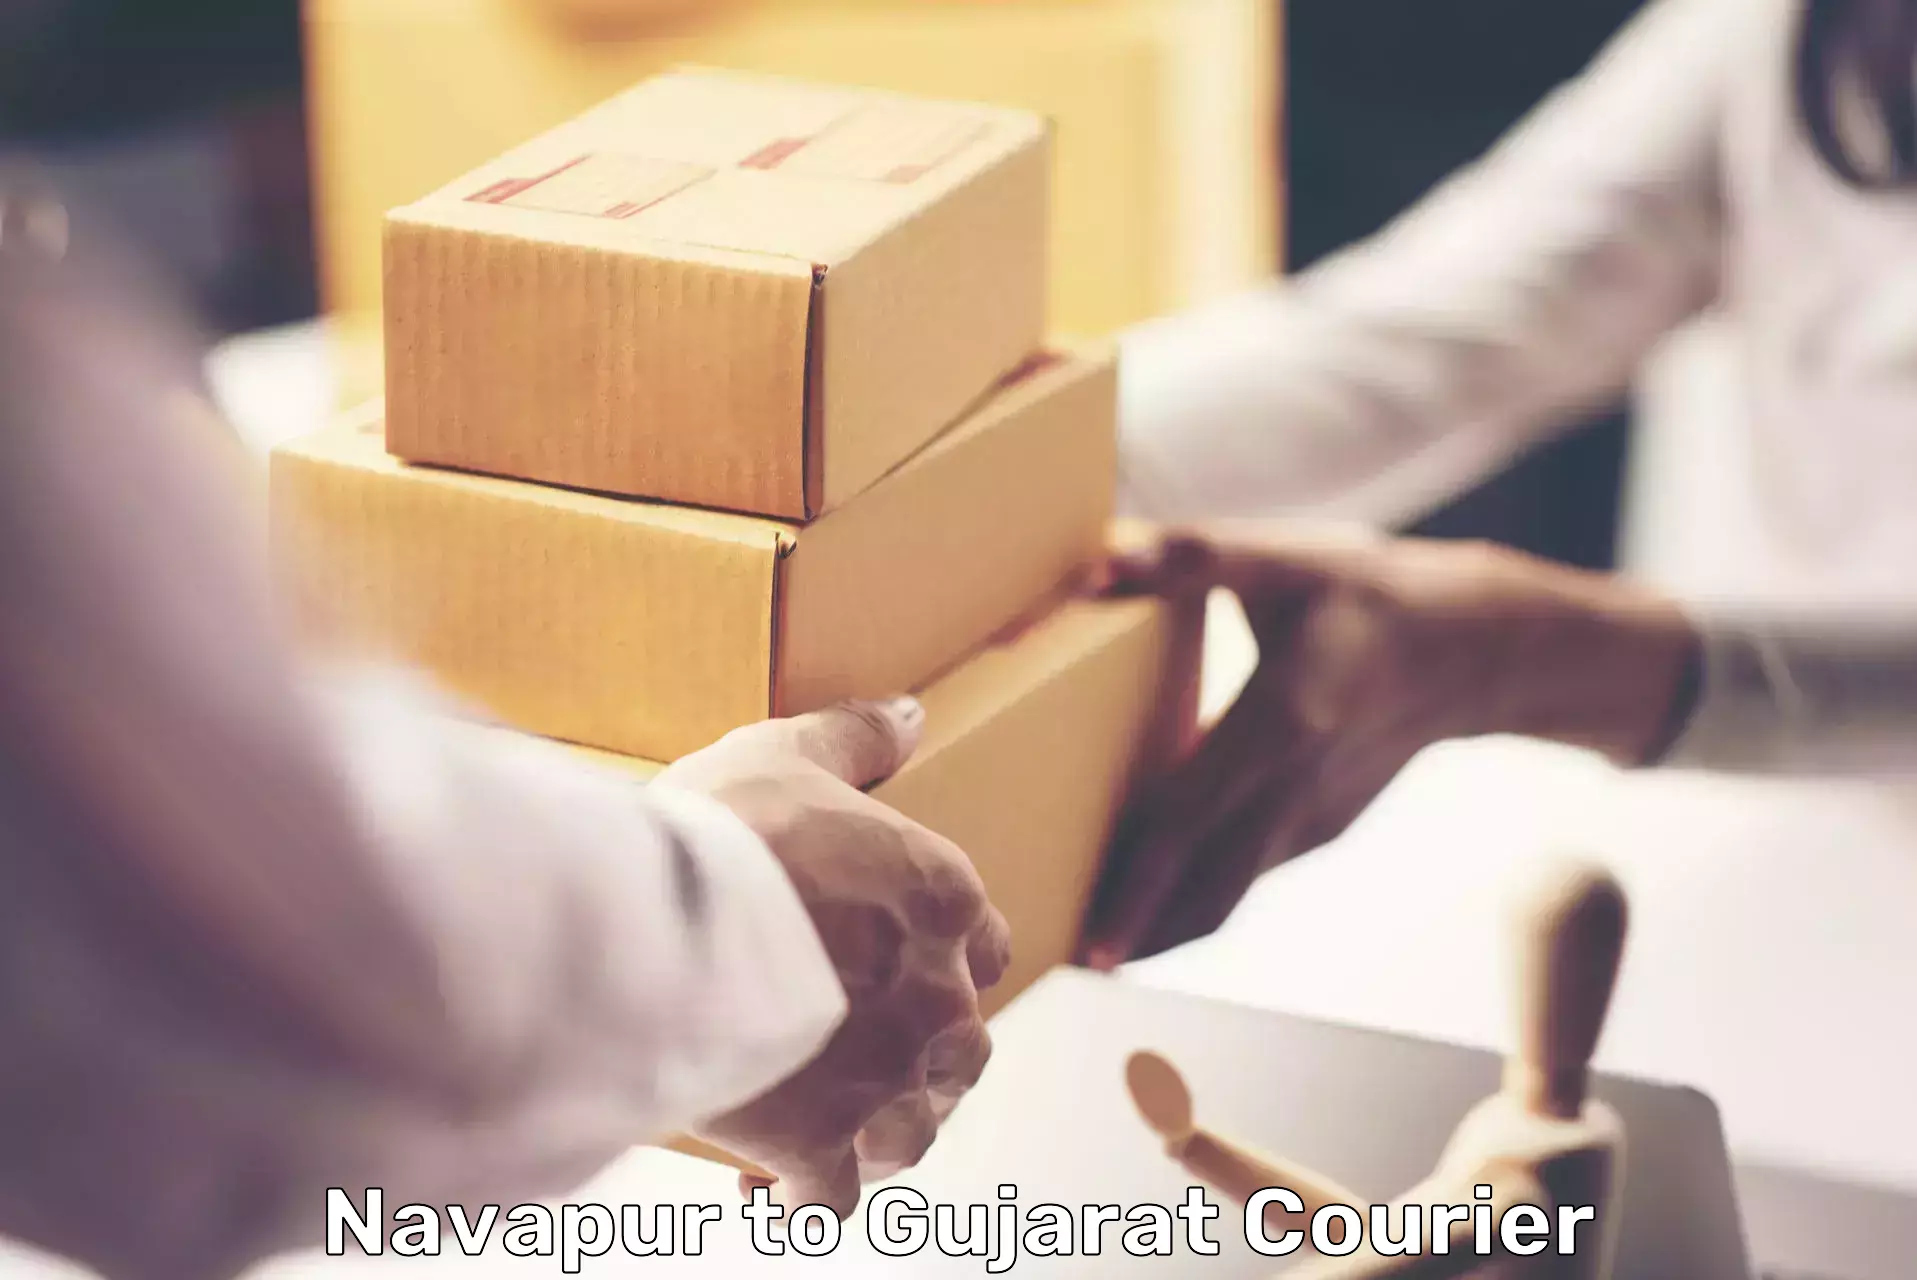 Courier service comparison in Navapur to Jetpur